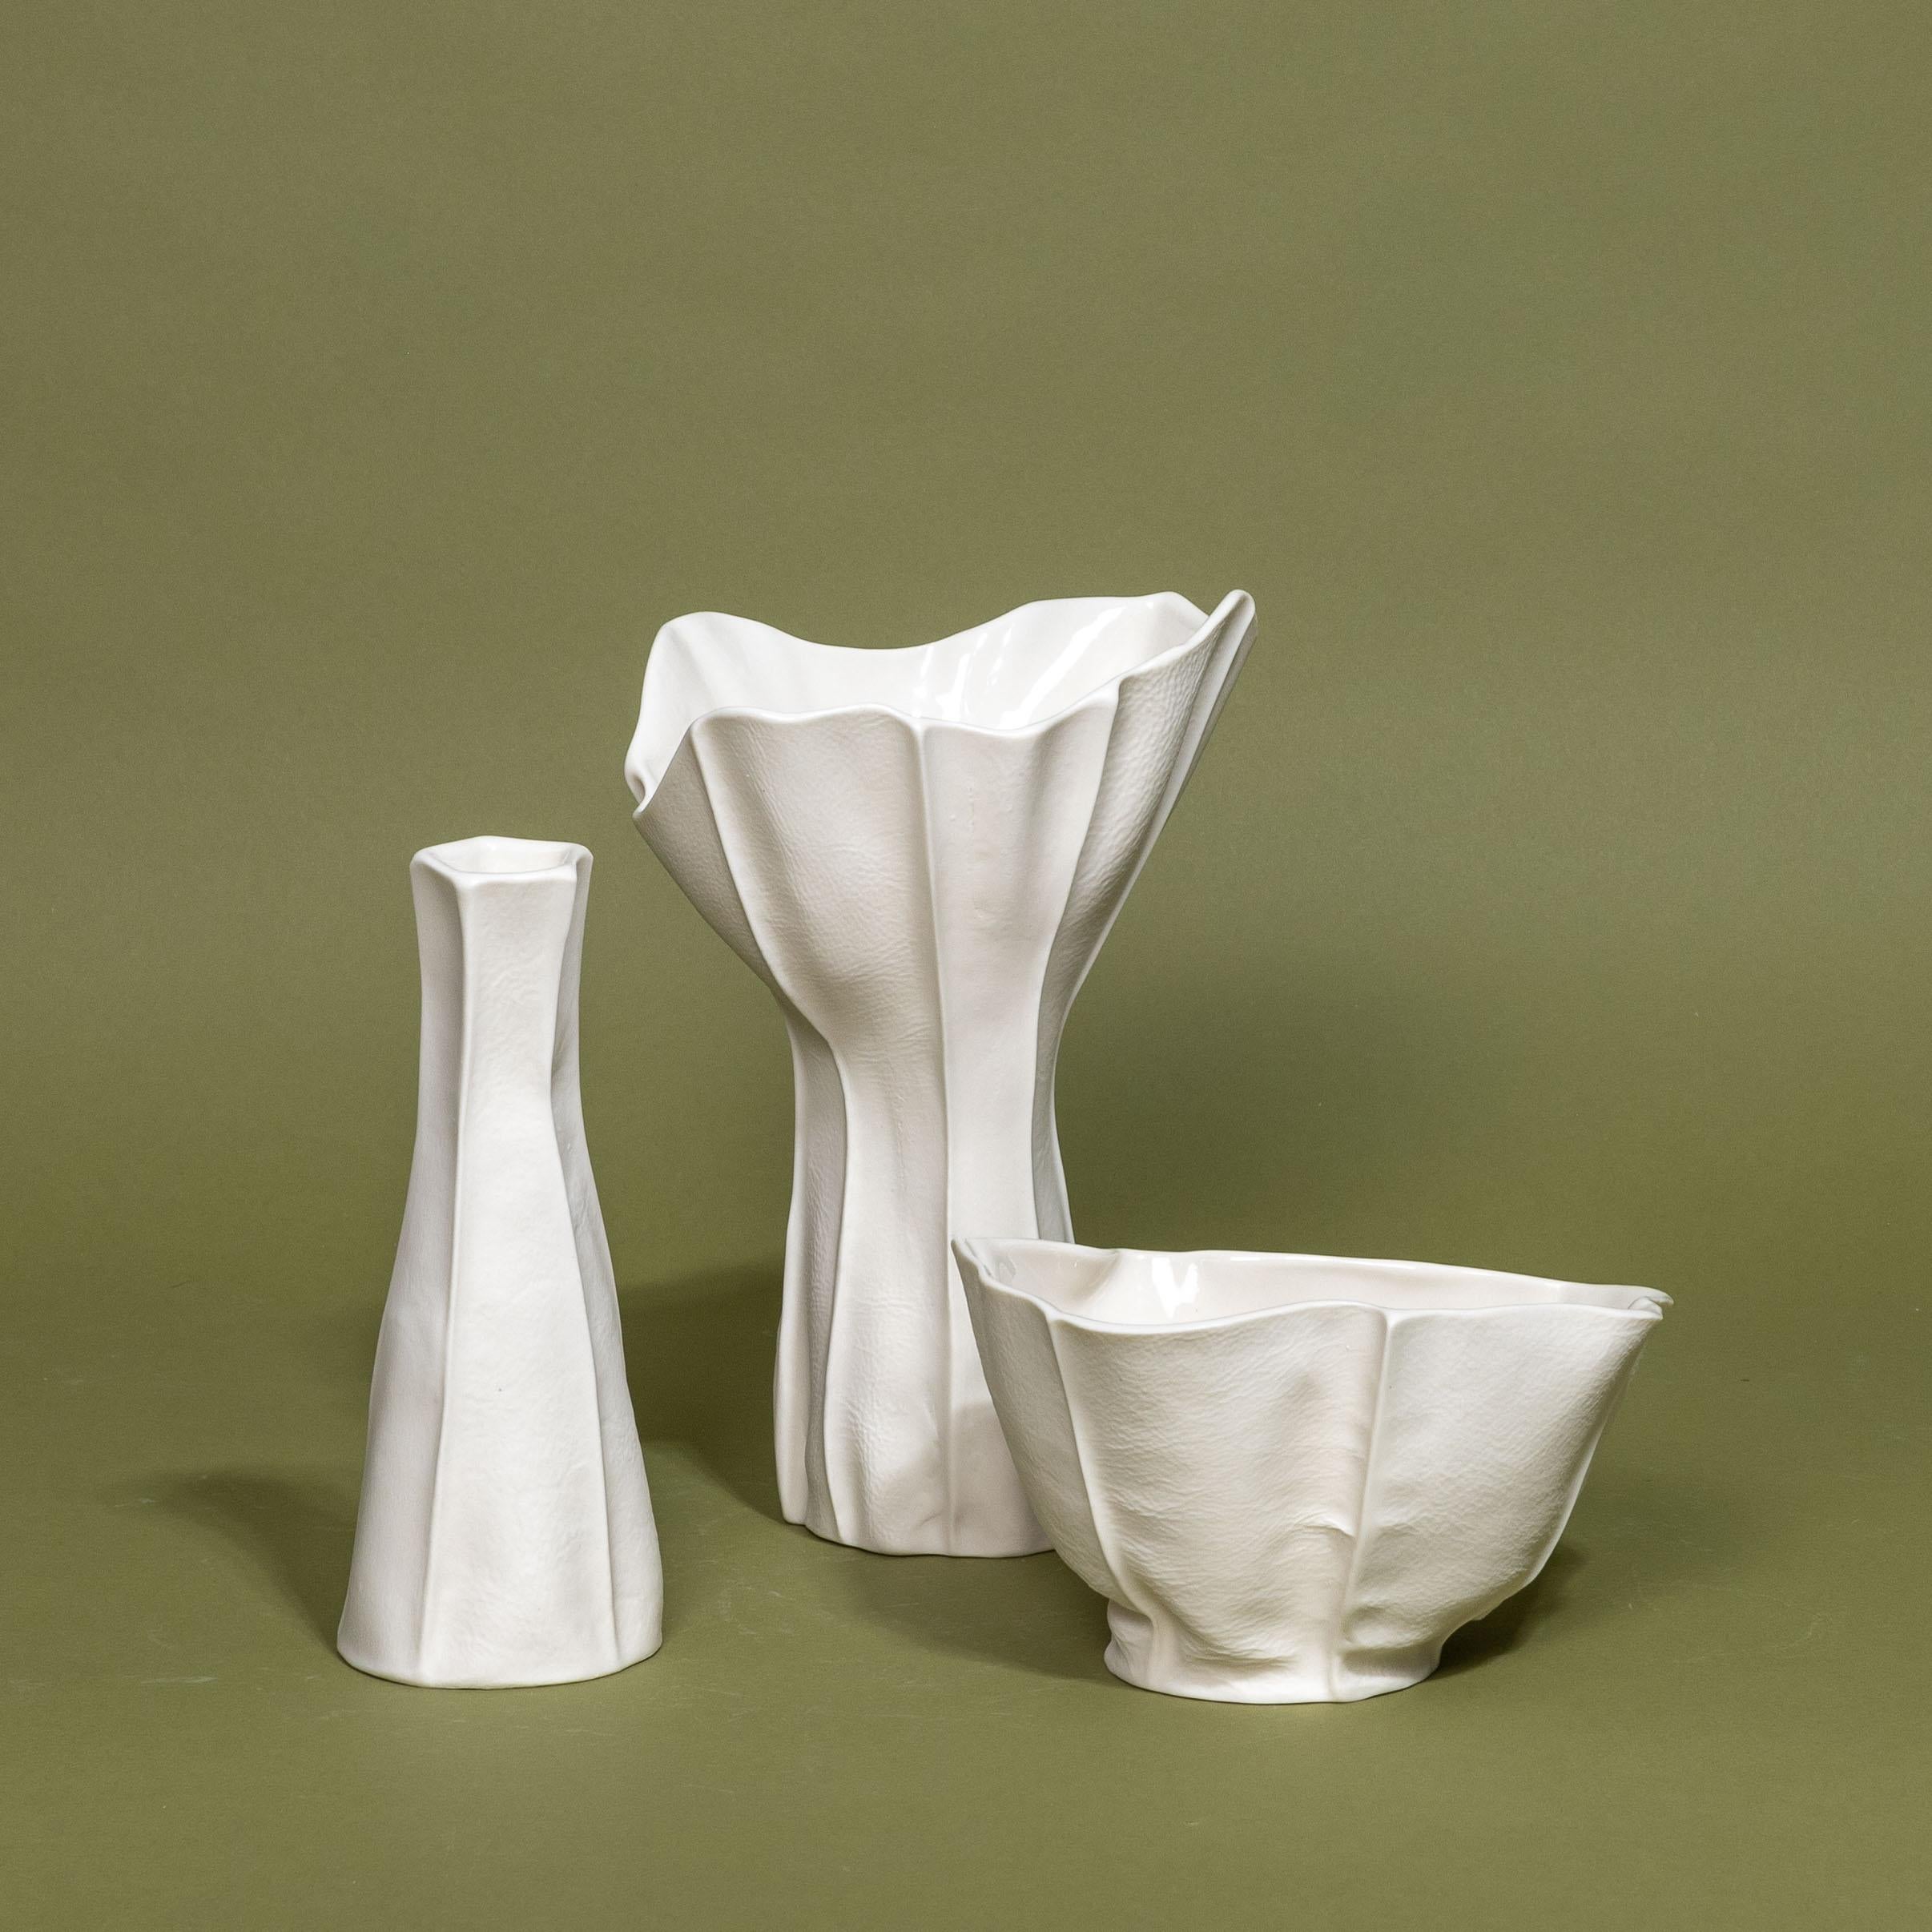 Other In-Stock, Set of 3 White Ceramic Vases & Bowl, Luft Tanaka, Porcelain, Organic